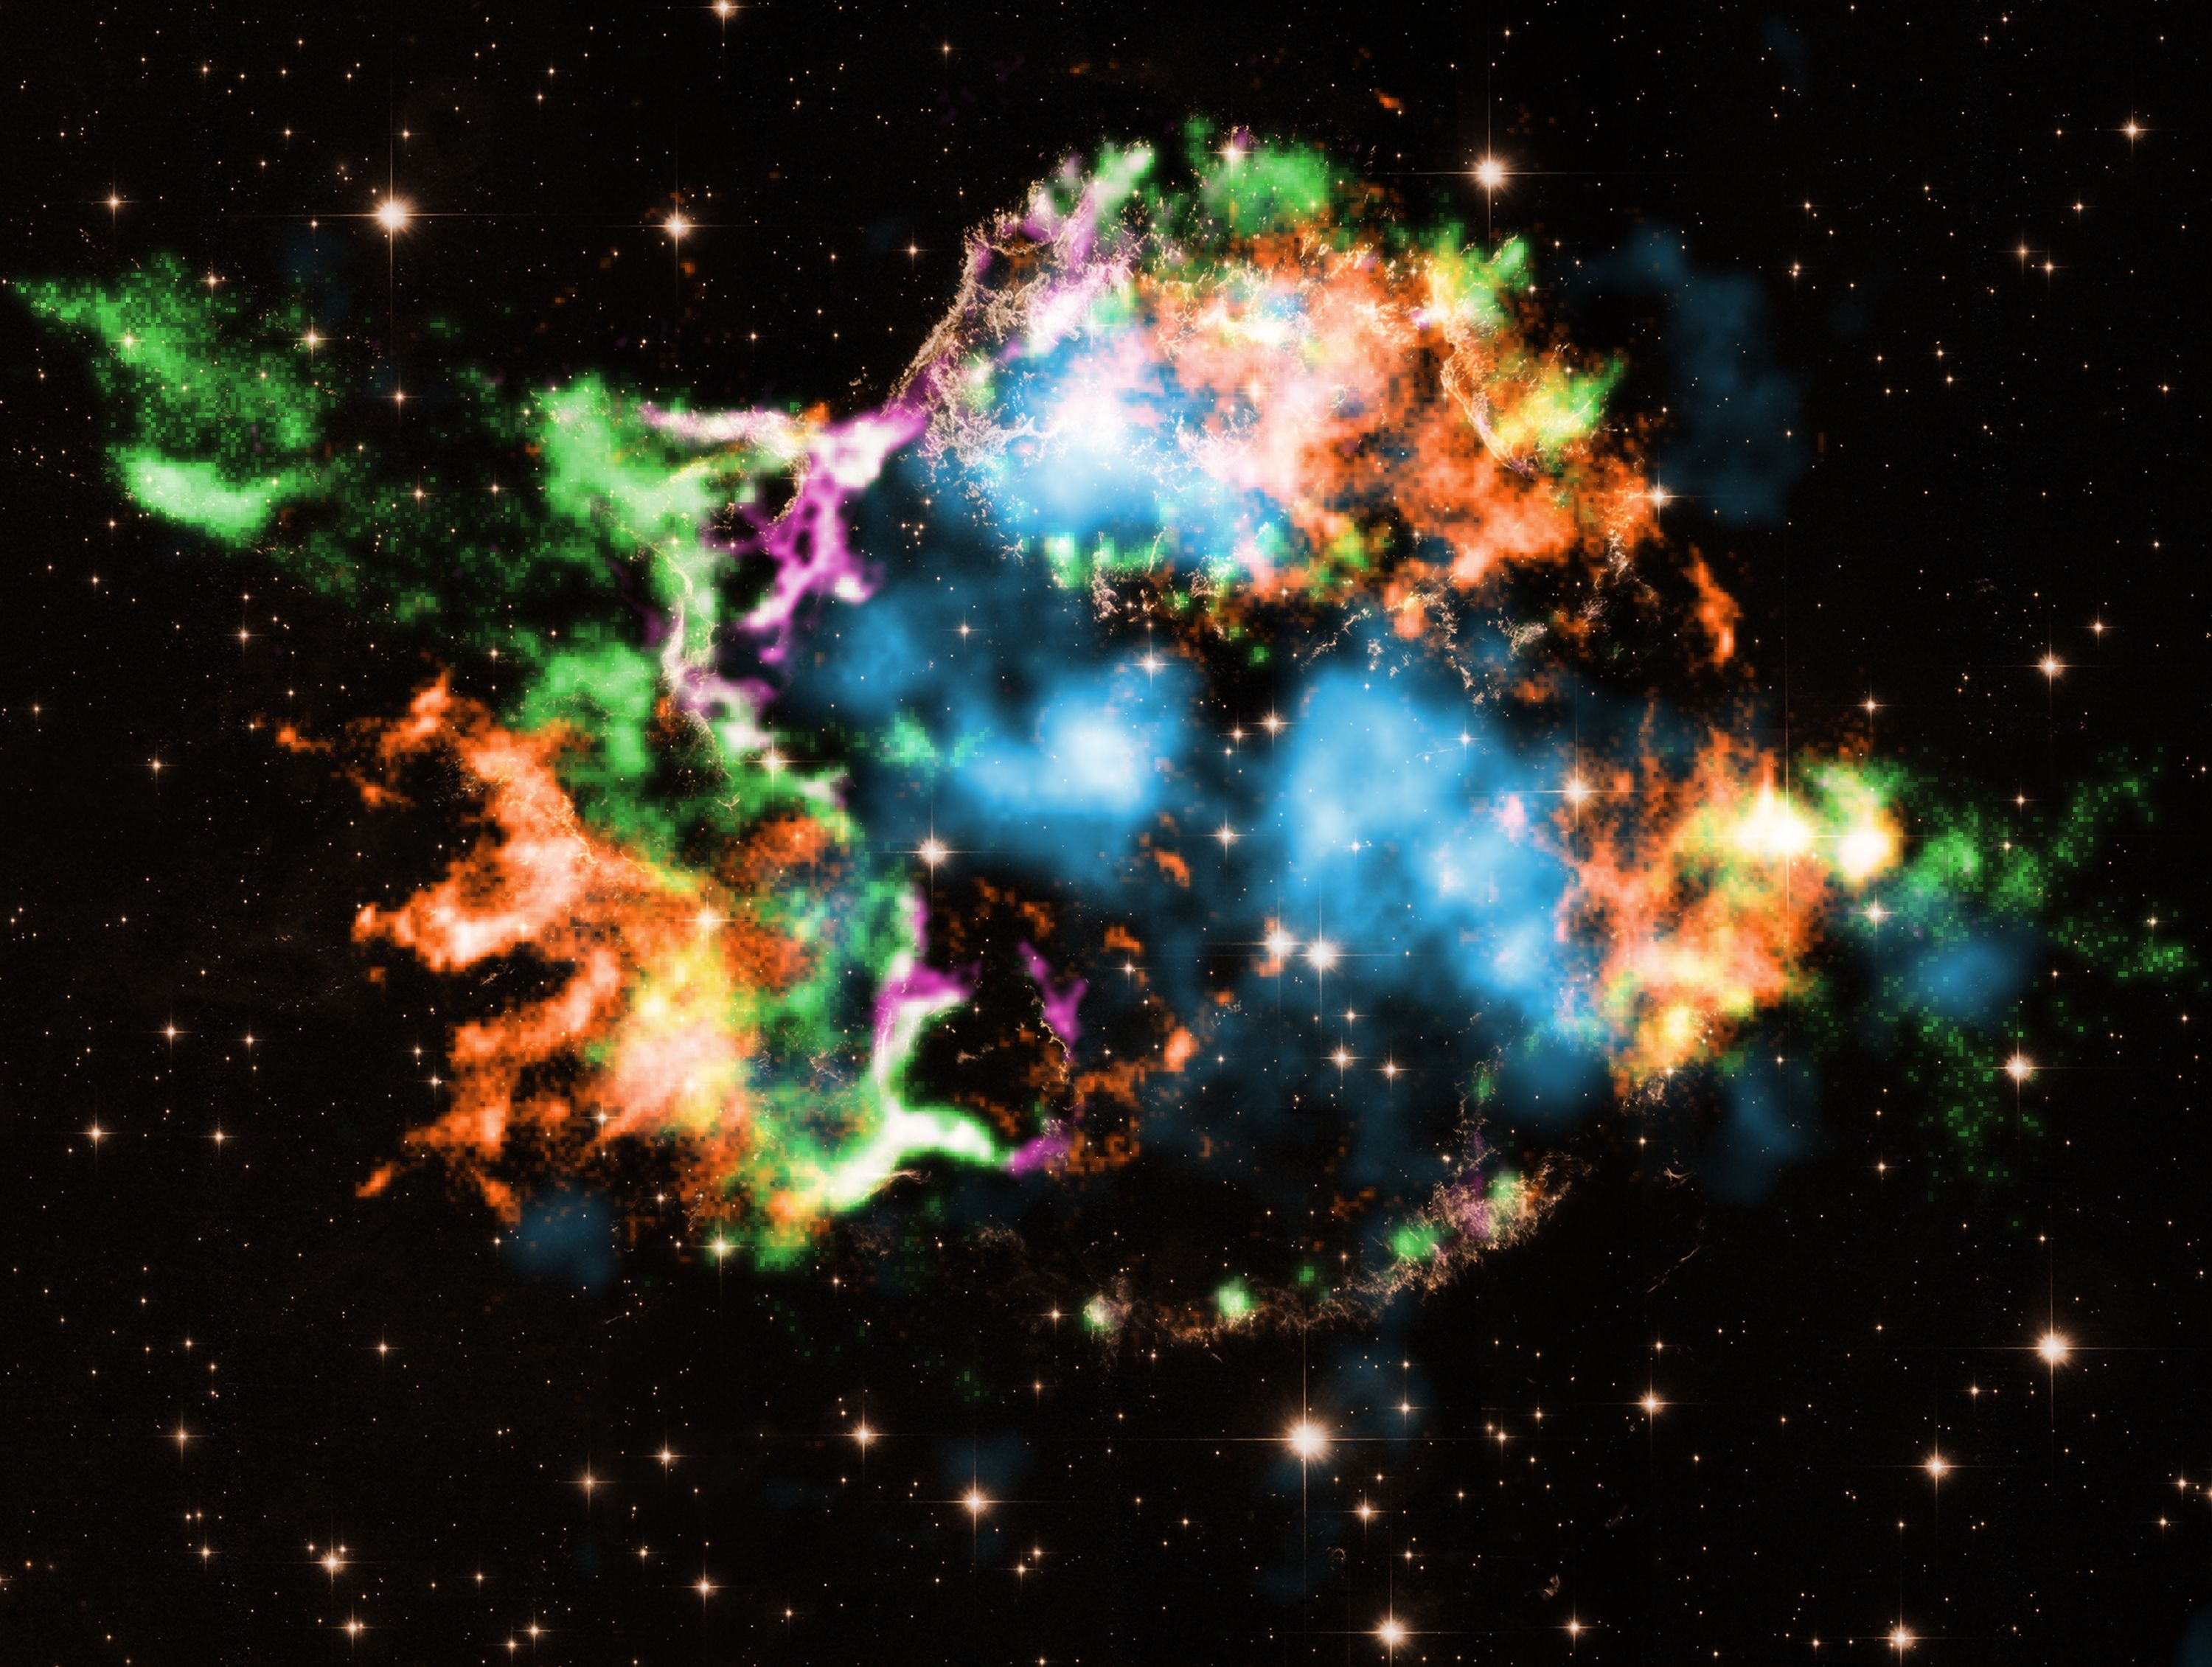 ESA - Gaia discovers its first supernova